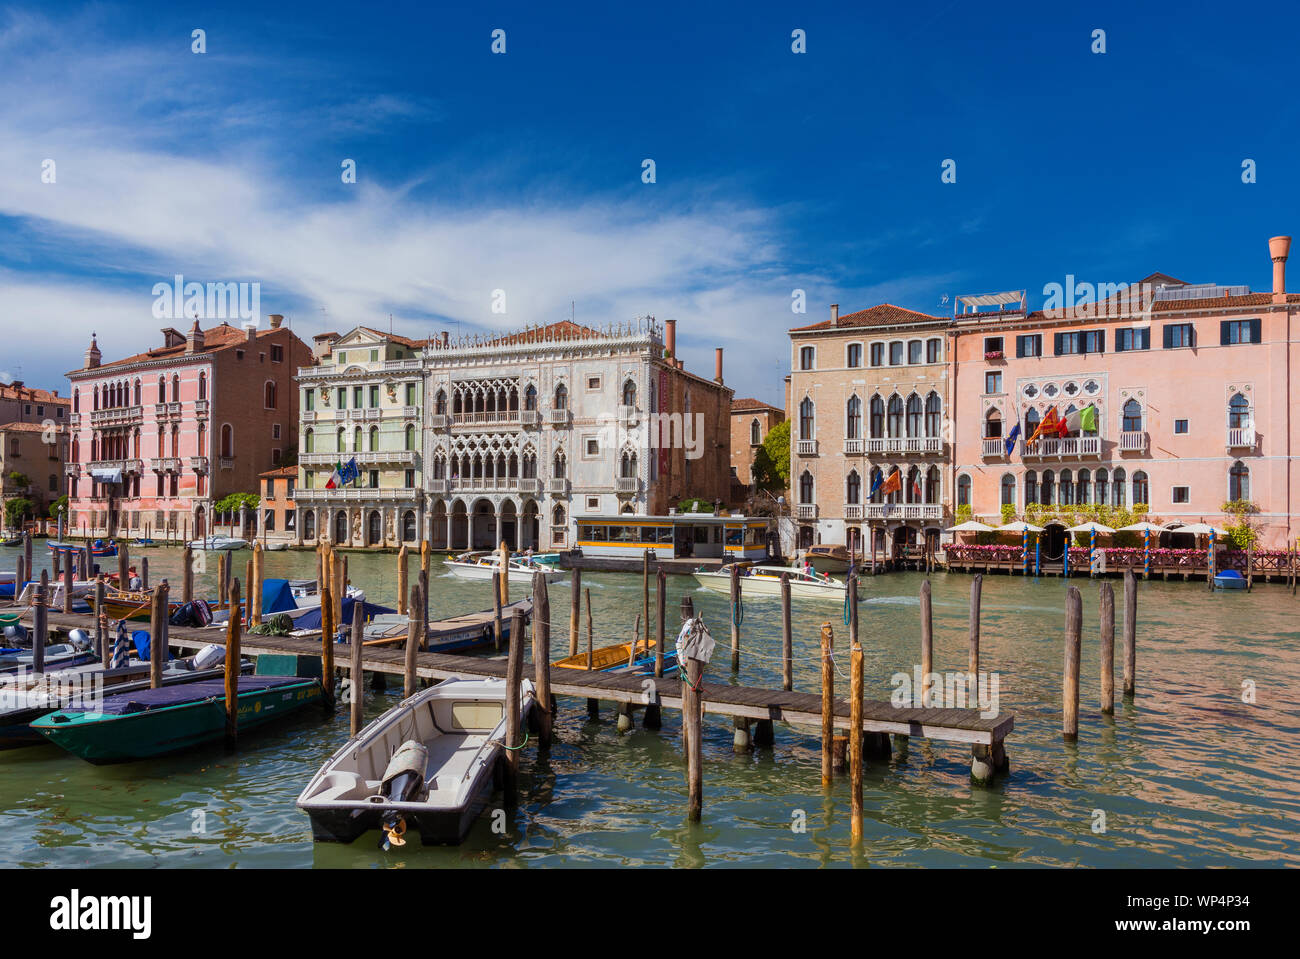 Blick auf Venedig Canale Grande mit der berühmten gotischen Ca' d'Oro (Goldenen Haus) Stockfoto